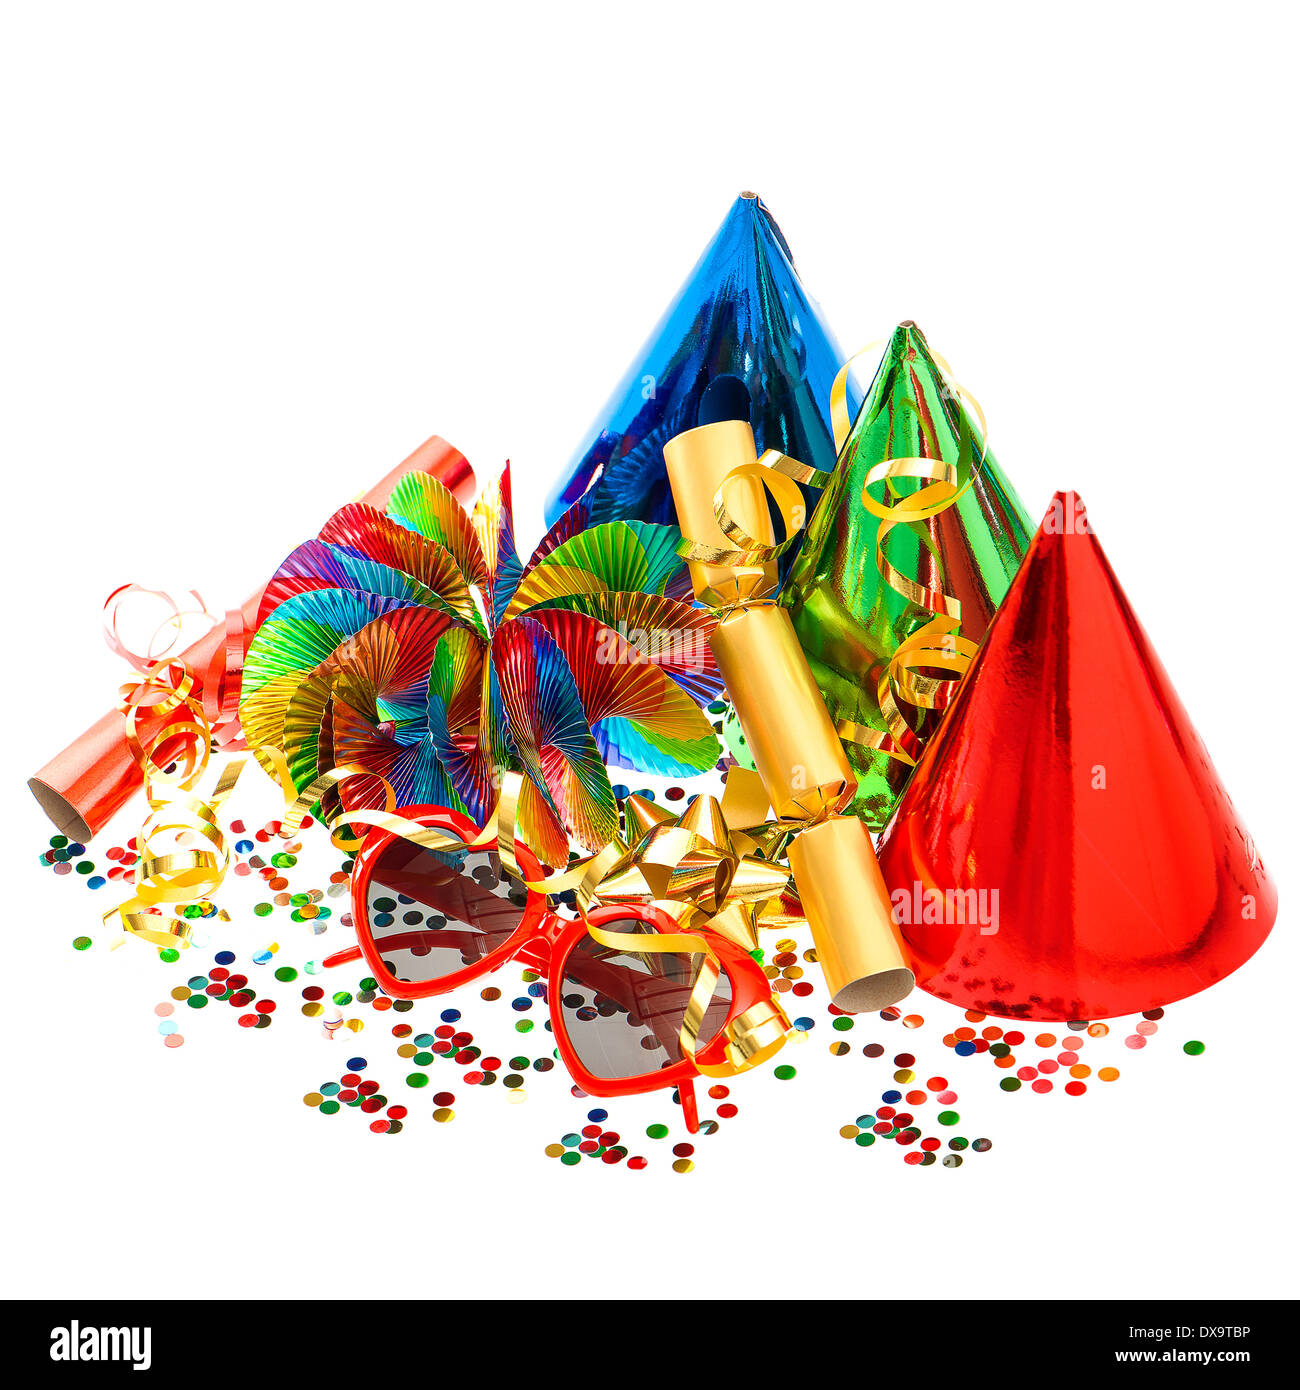 confetti, garlands, streamer, cracker, party glasses on white background Stock Photo